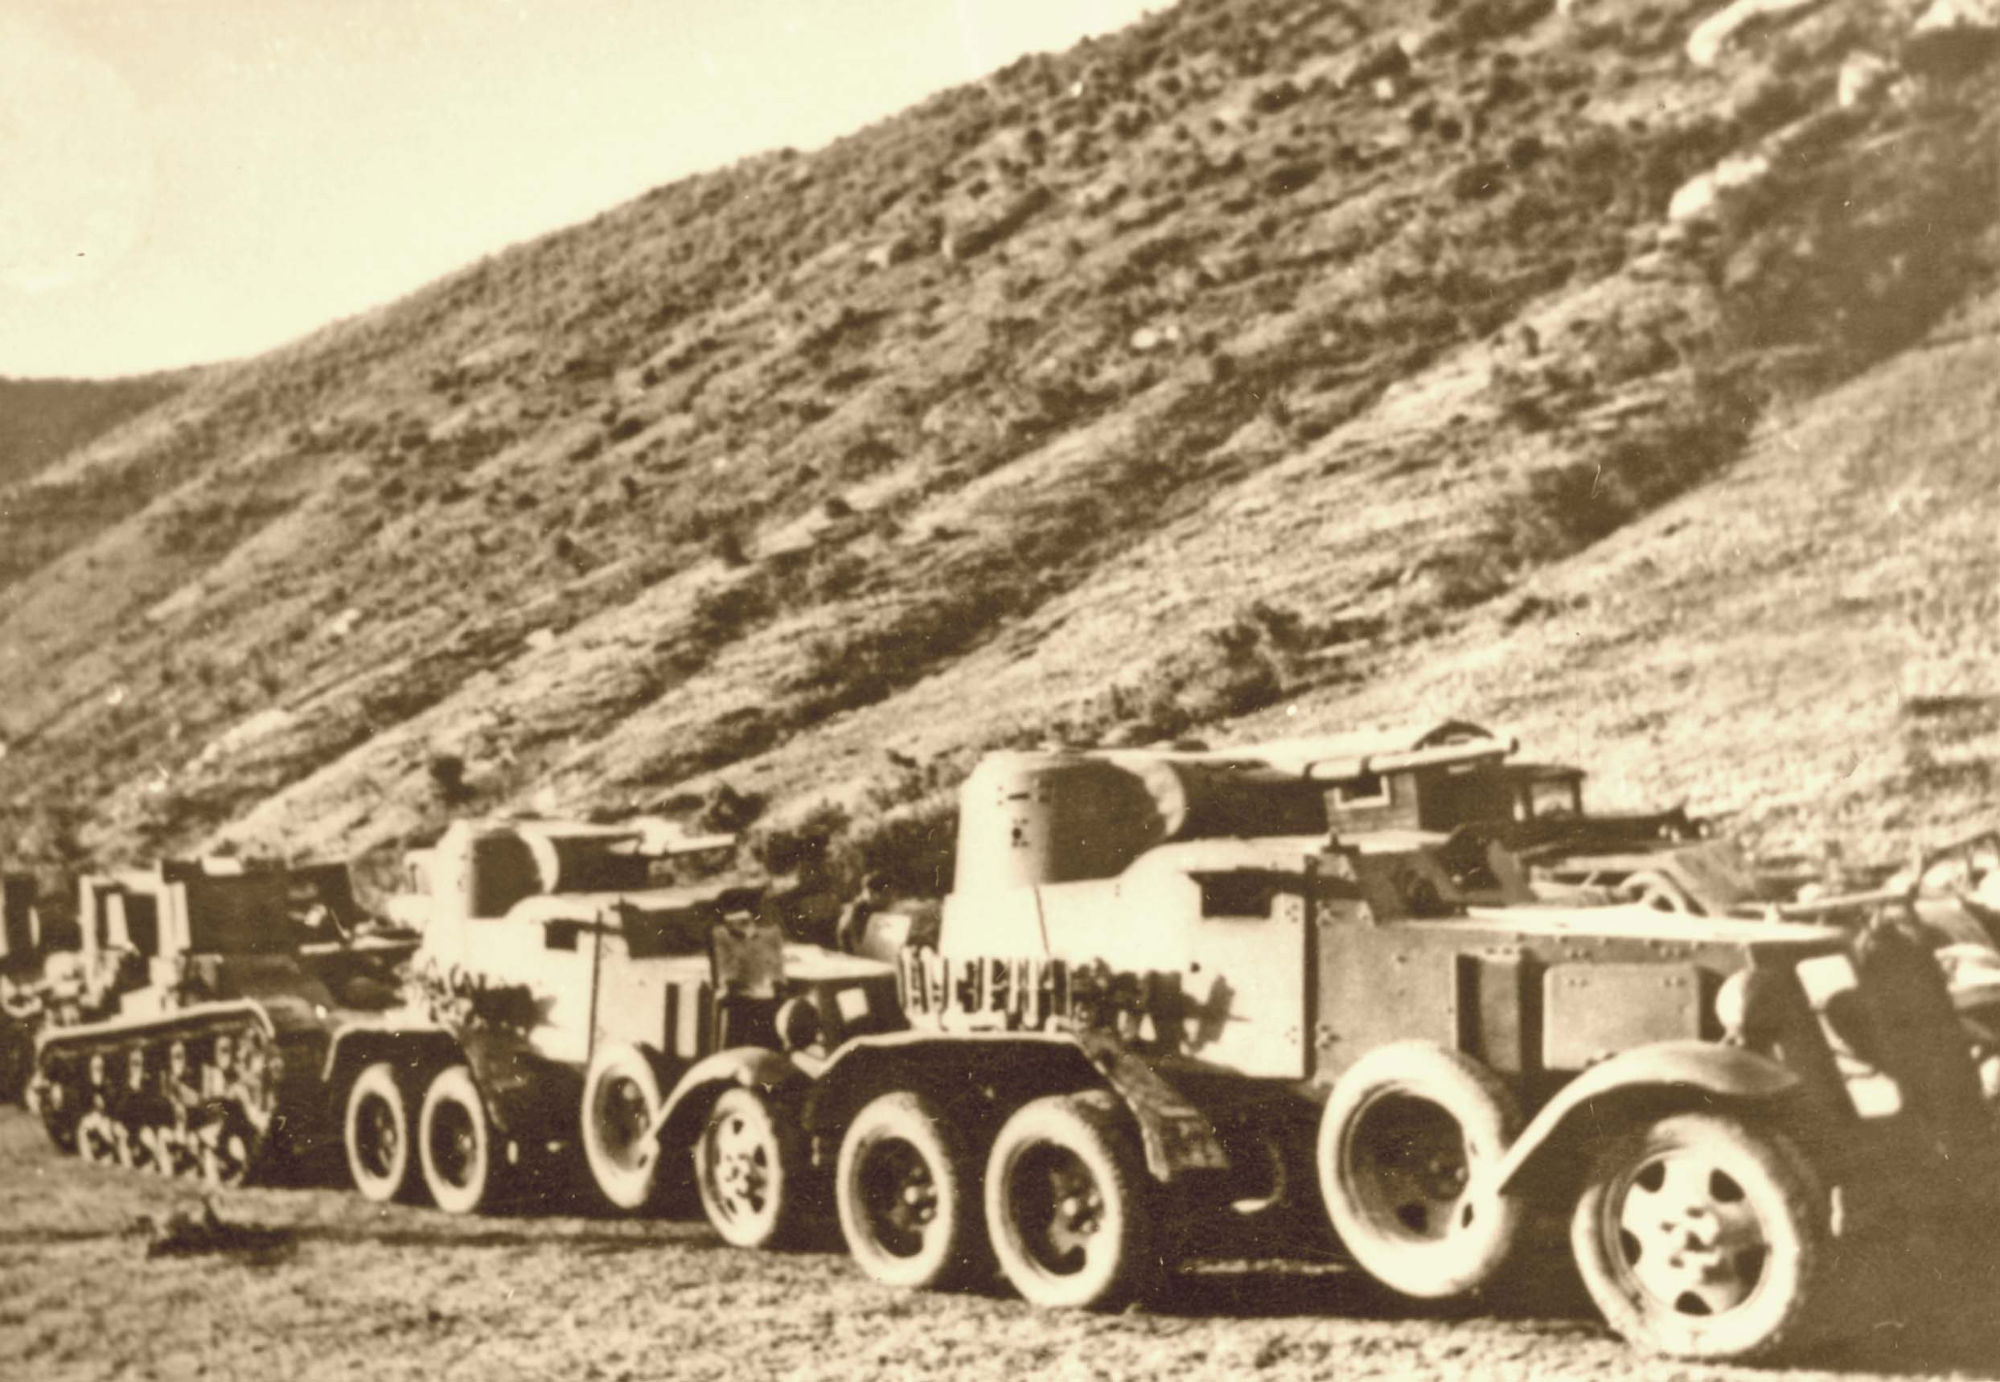 Soviet BA-10 armored cars in Romania, circa late Jun 1940